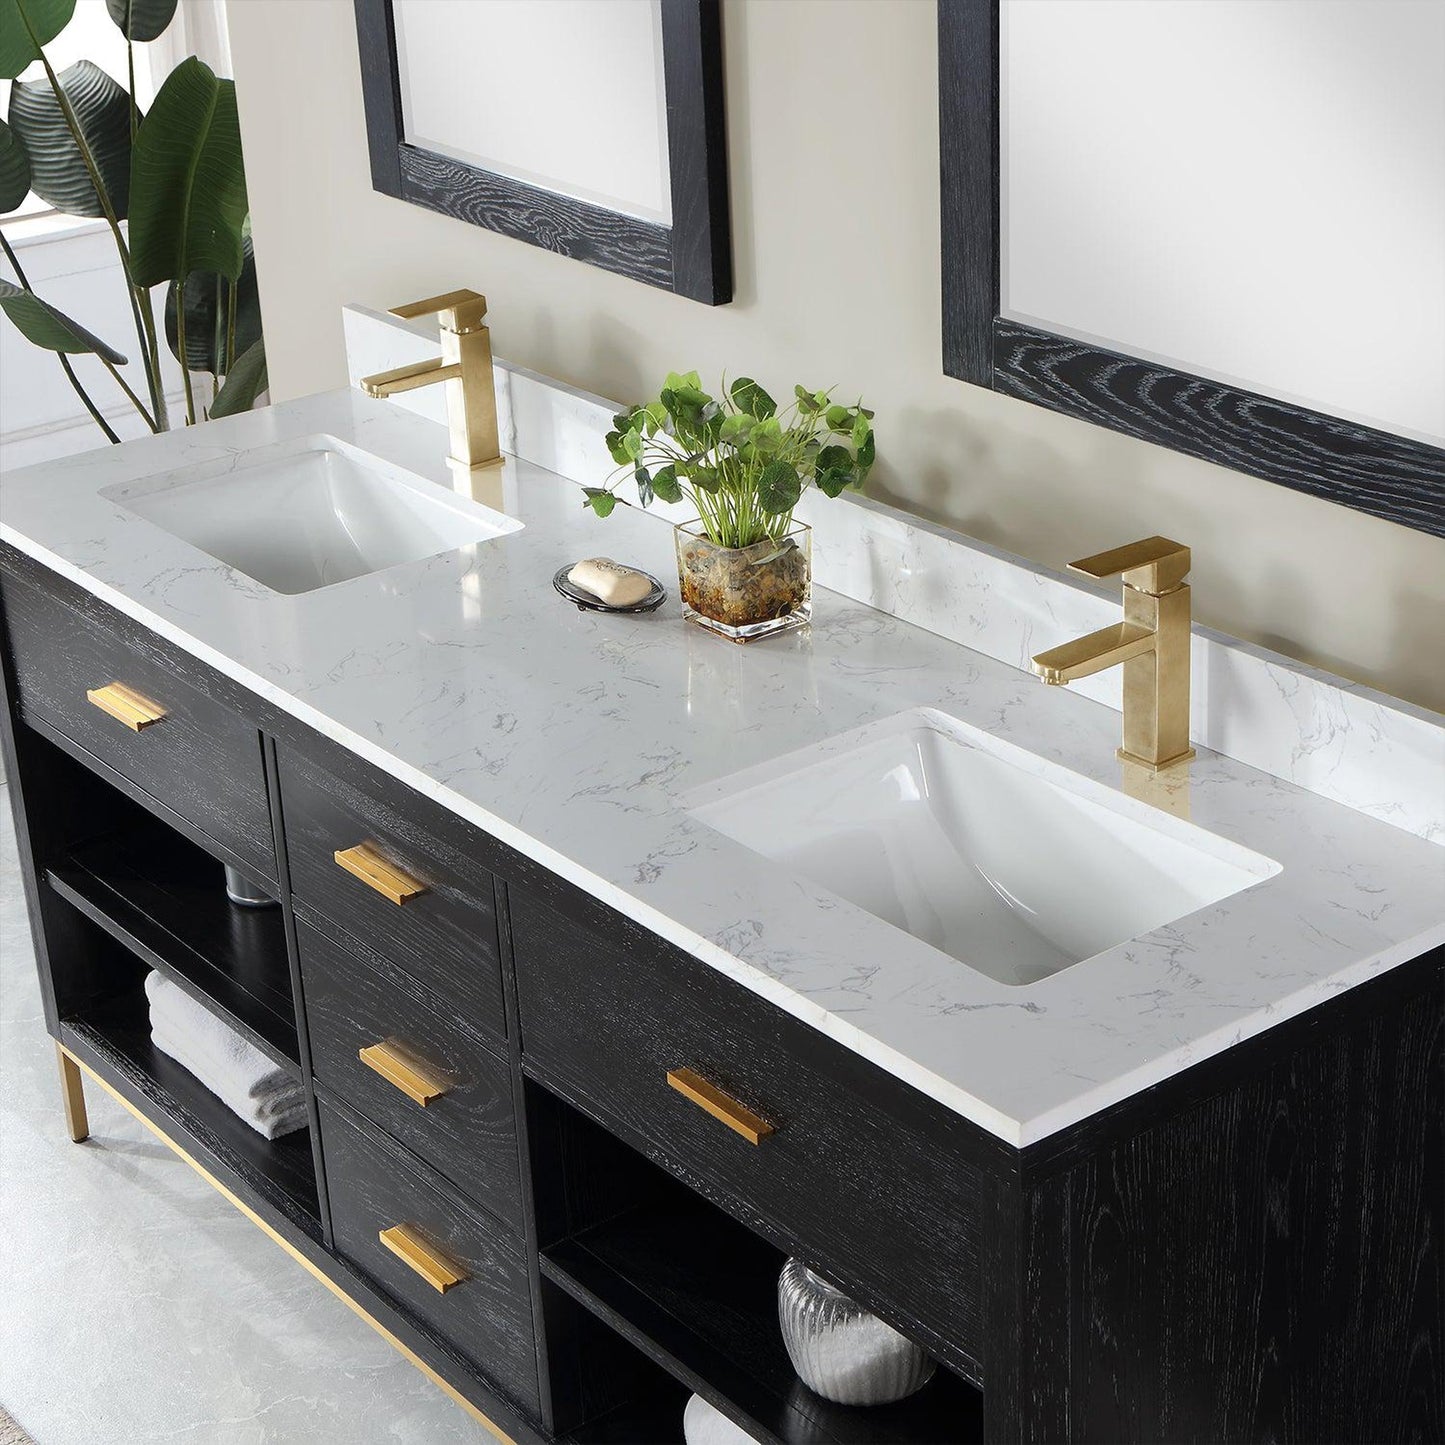 Altair Kesia 72" Black Oak Freestanding Double Bathroom Vanity Set With Mirror, Stylish Aosta White Composite Stone Top, Two Rectangular Undermount Ceramic Sinks, Overflow, and Backsplash